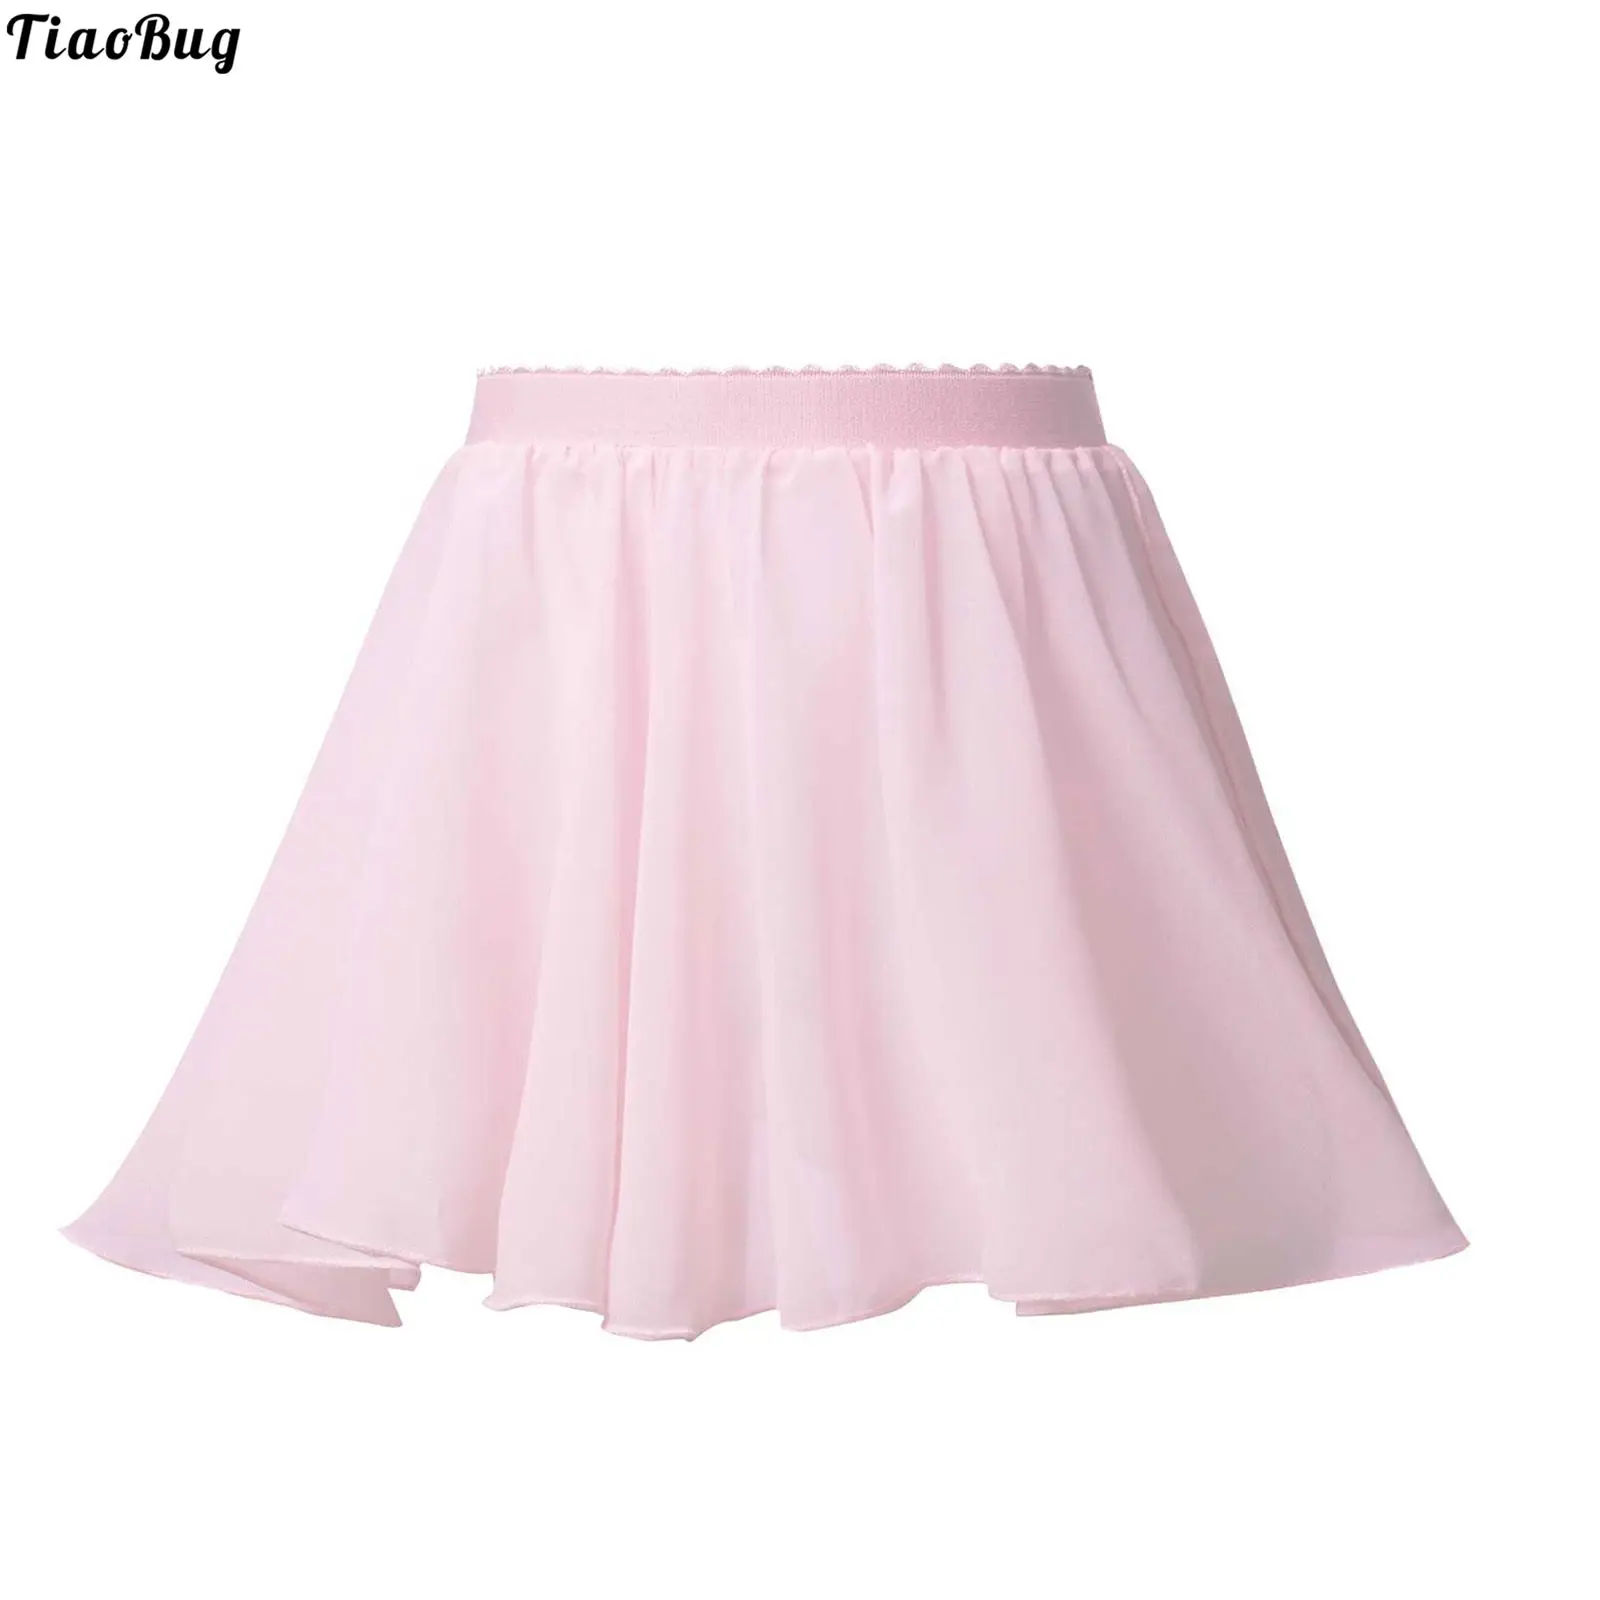 Купи TiaoBug Summer Kids Girls Ballet Dance Skirt Elastic Waistband Solid Color Chiffon Veil Skirt Dancewear Performance Costumes за 197 рублей в магазине AliExpress